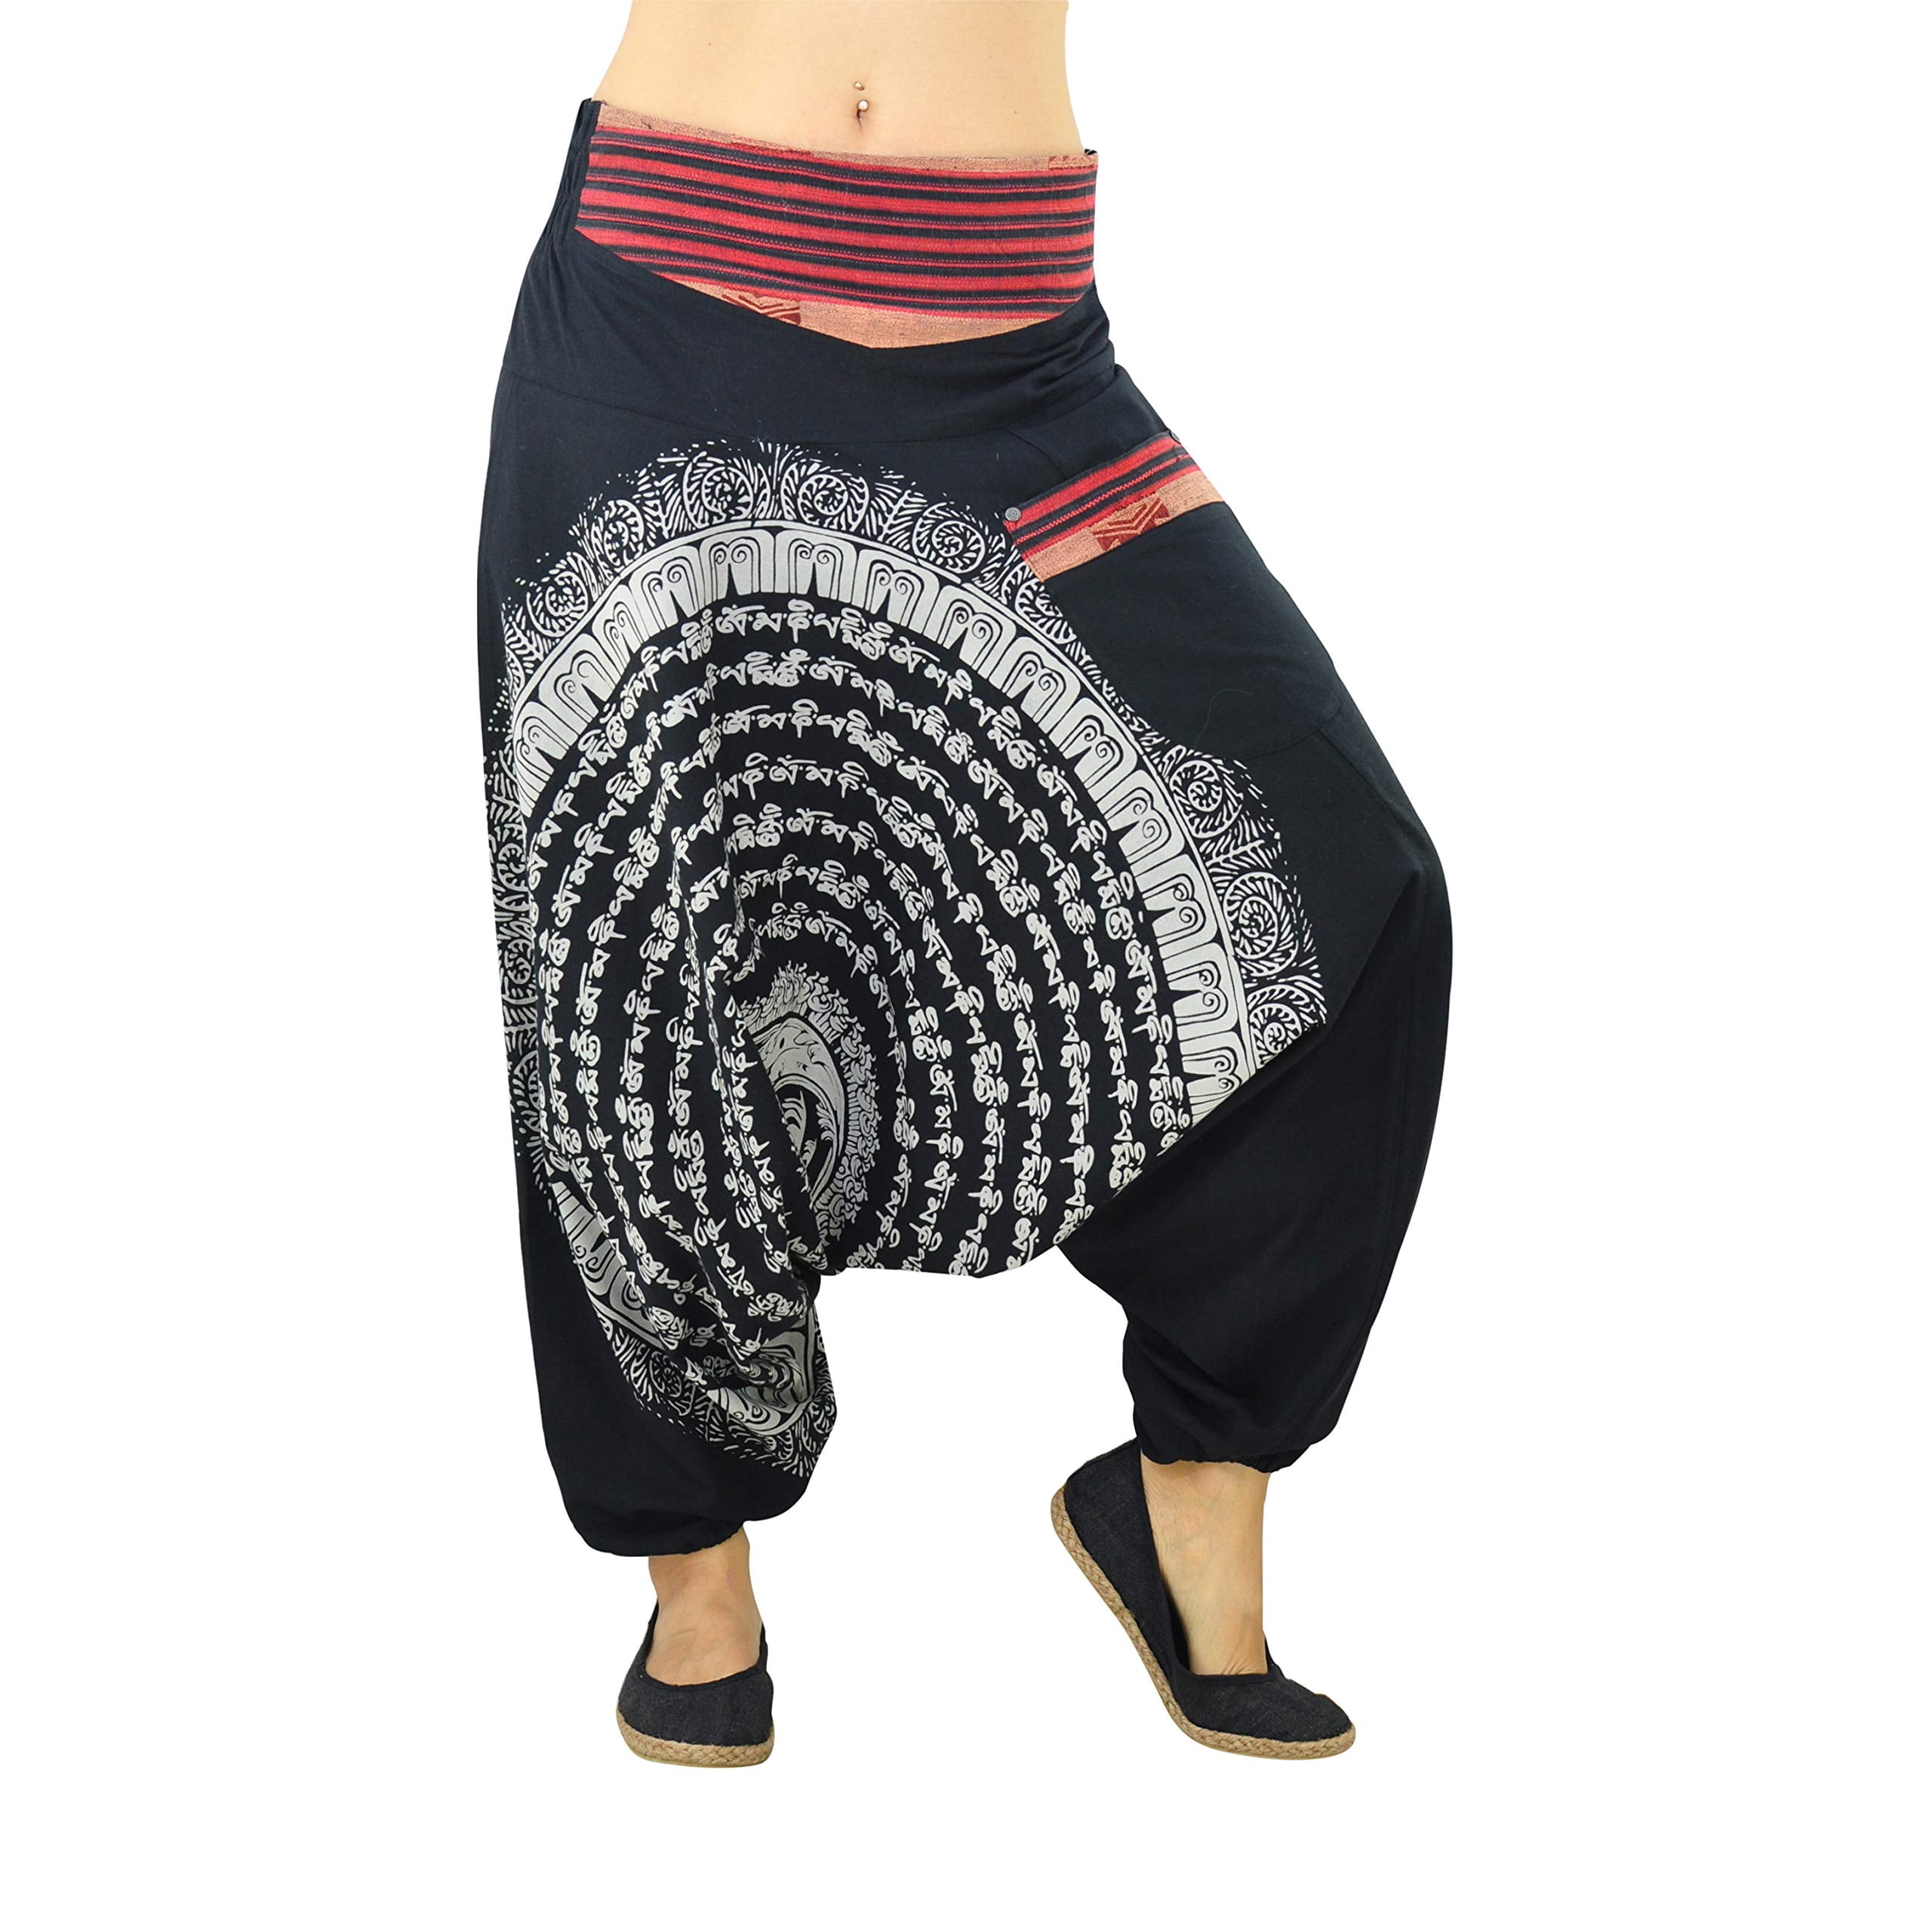 Black Harem Pants for Women  100% Cotton Yoga Harem Pants with